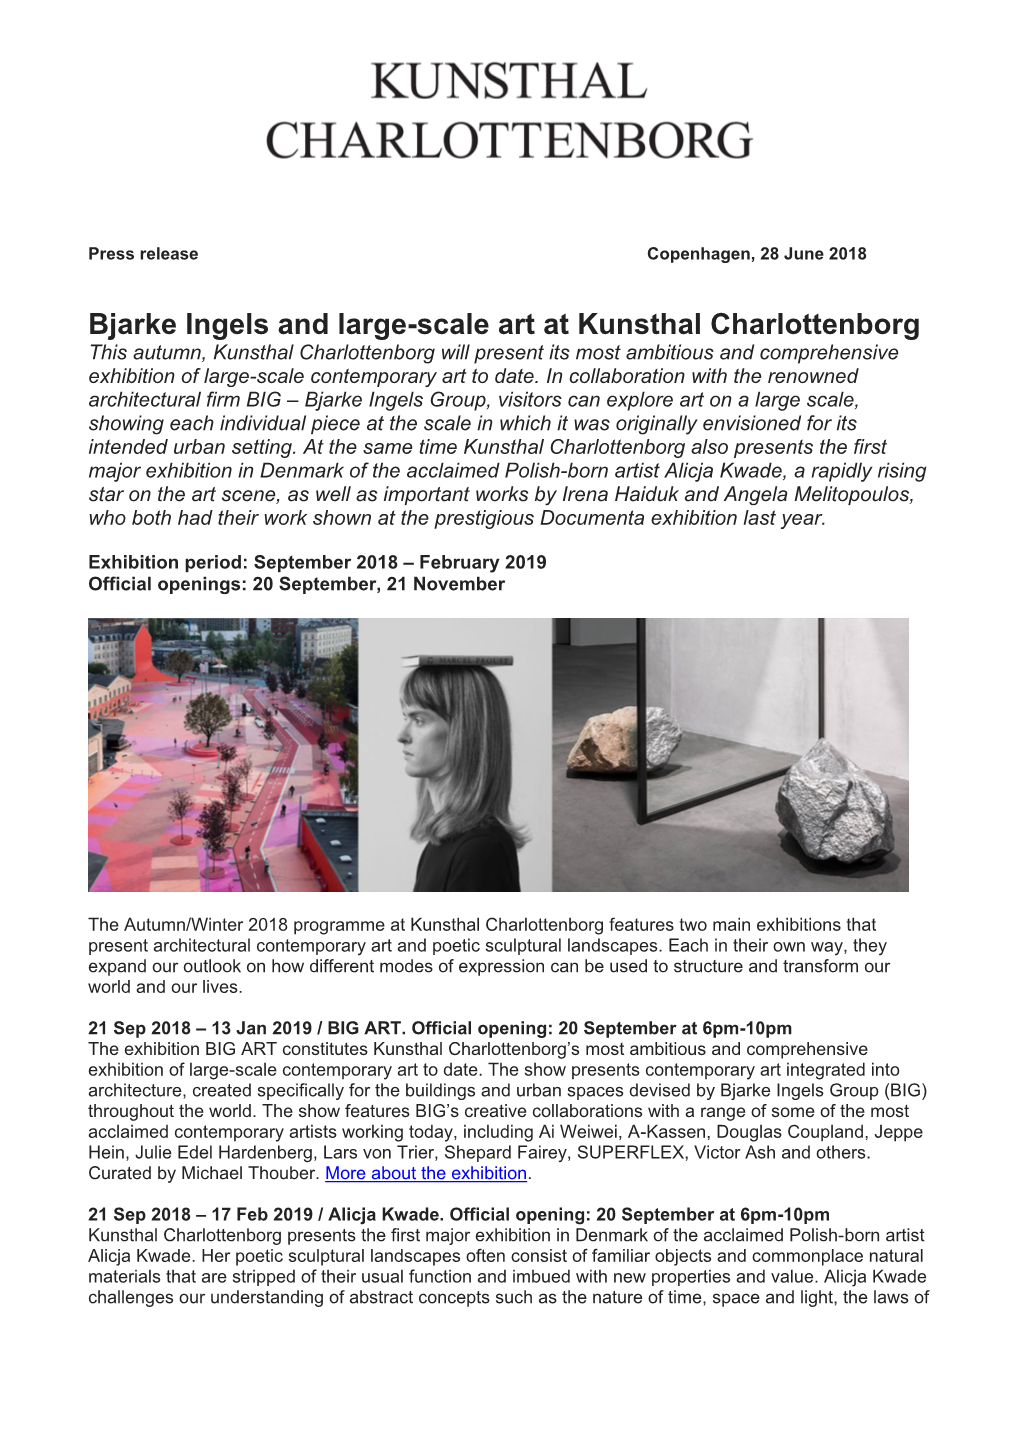 Bjarke Ingels and Large-Scale Art at Kunsthal Charlottenborg